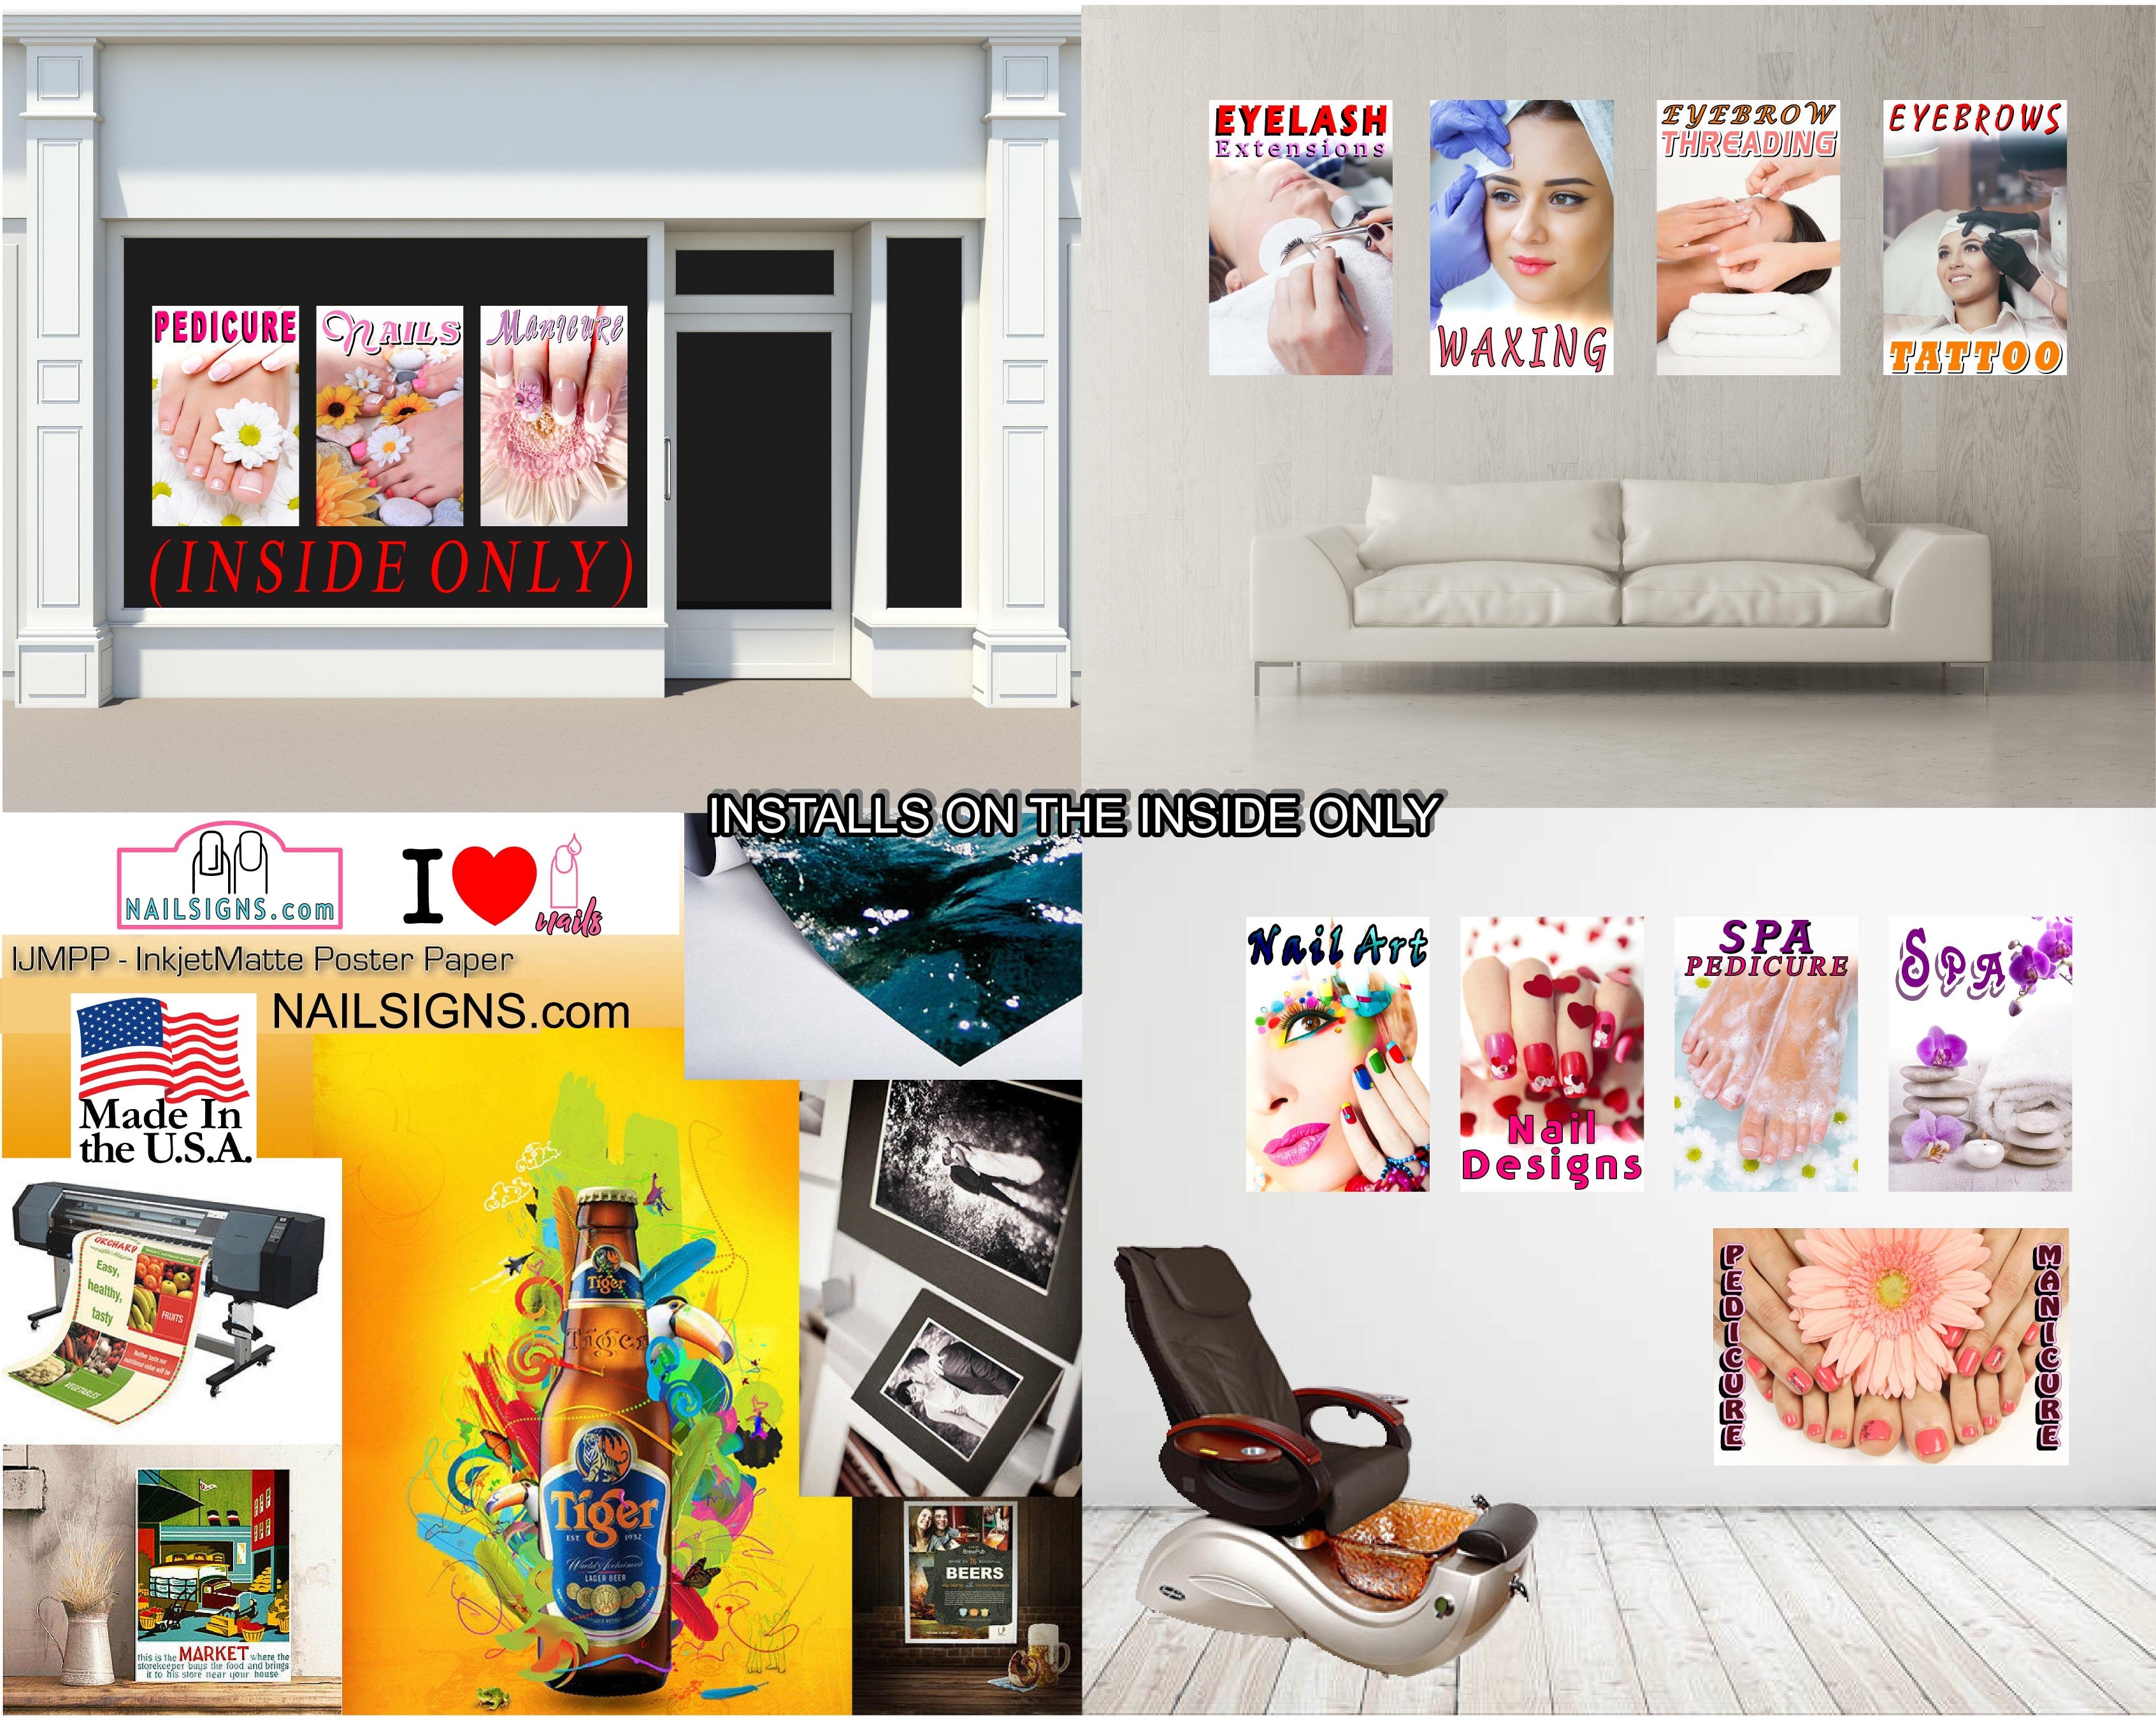 Pedicure 23 Photo-Realistic Paper Poster Premium Matte Interior Inside Sign Advertising Marketing Wall Window Non-Laminated Vertical